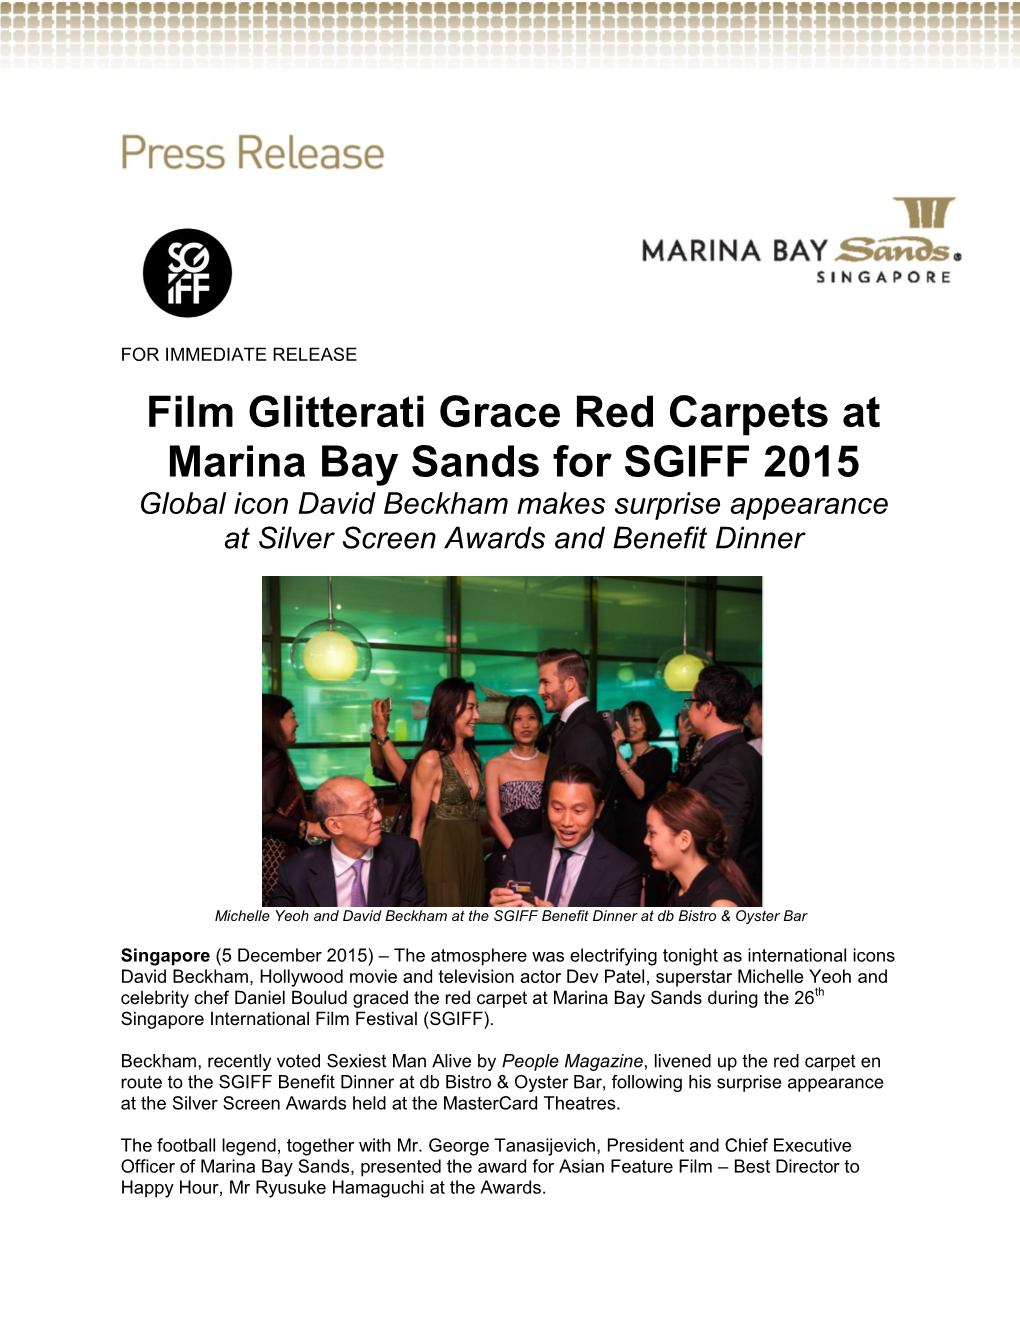 Film Glitterati Grace Red Carpets at Marina Bay Sands for SGIFF 2015